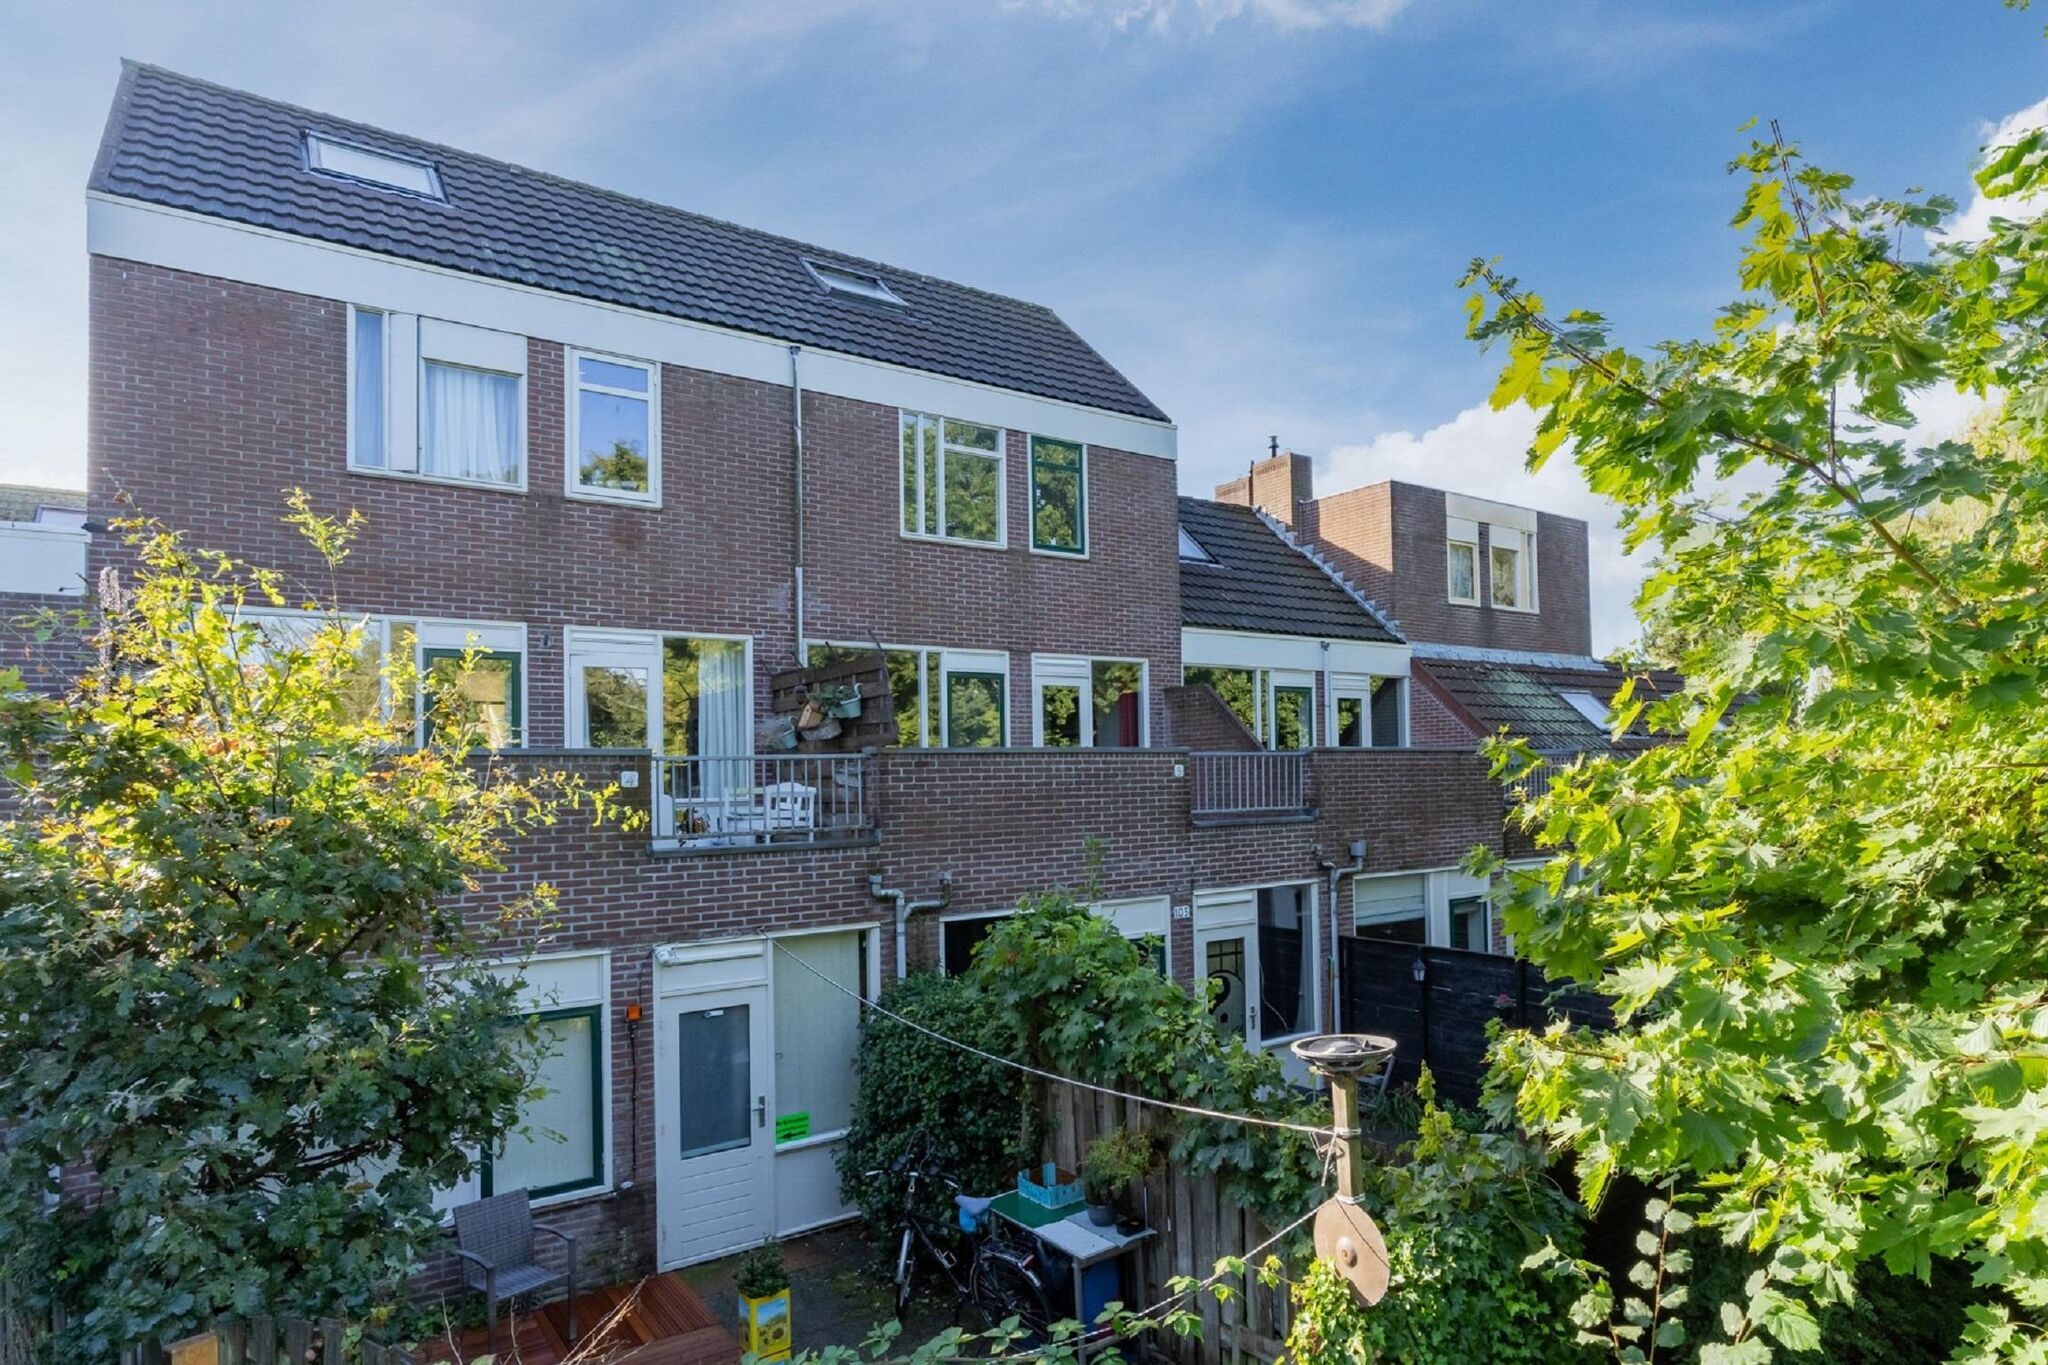 Cosy apartment in Alkmaar with balcony